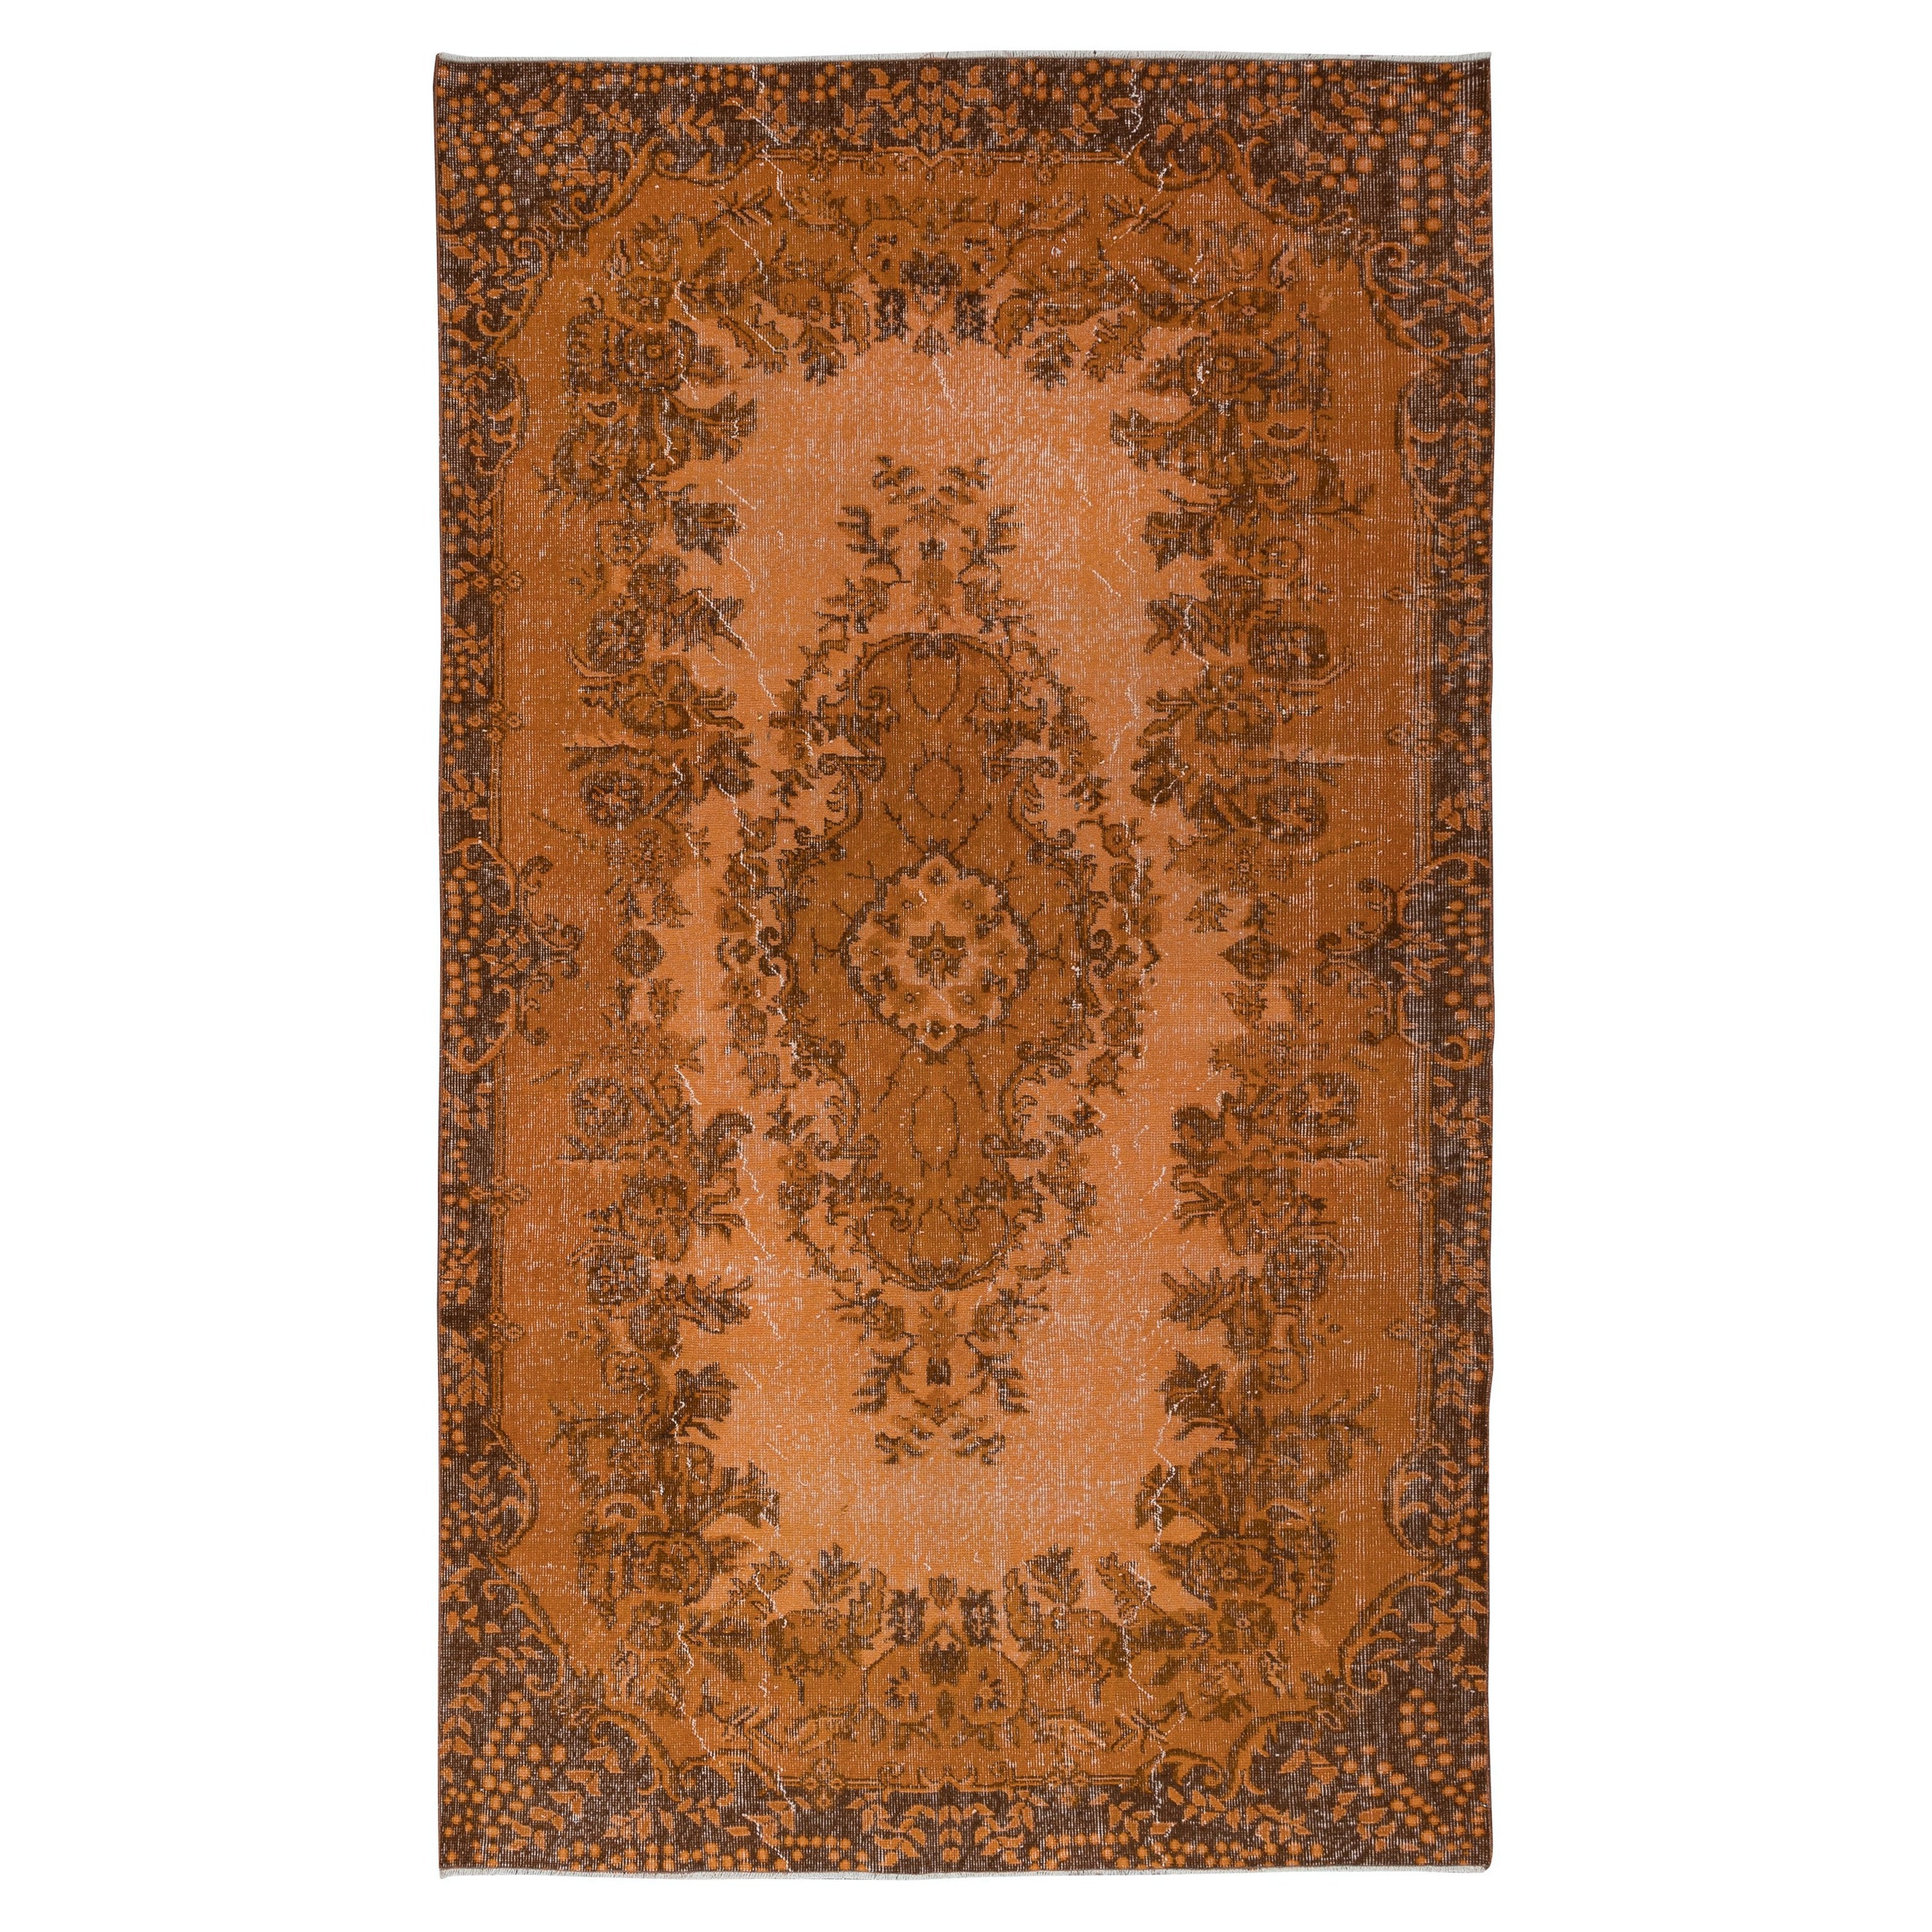 5.6x9.4 Ft Authentic Orange Rug for Modern Interiors, Handmade Anatolian Carpet